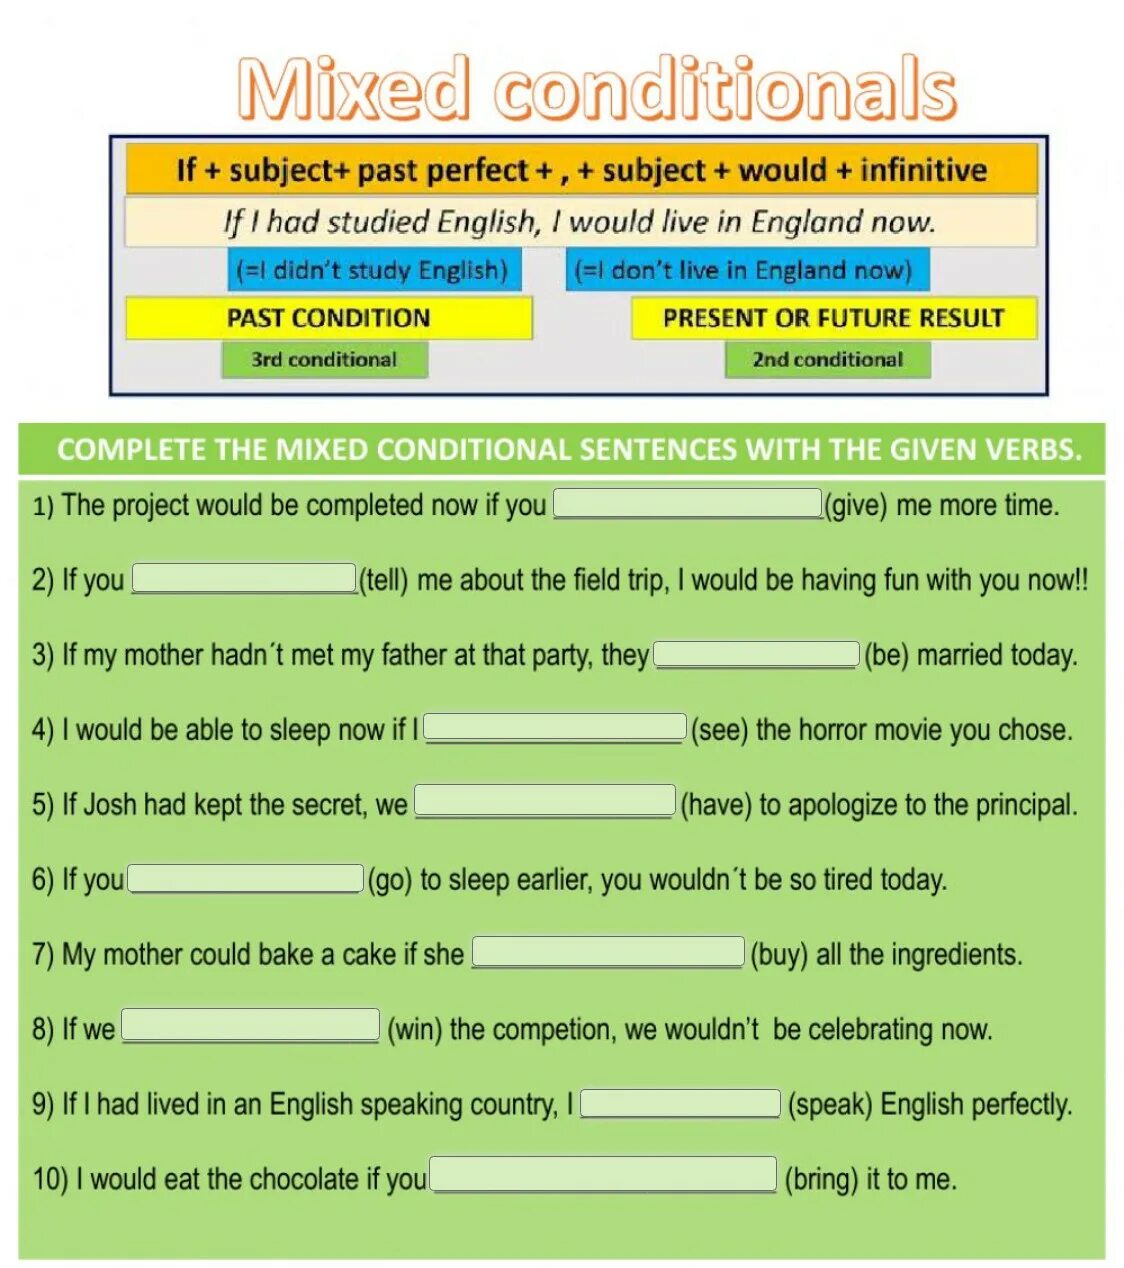 Conditionals liveworksheets. Conditionals упражнения. Mixed conditionals в английском Worksheets. Условные предложения Worksheets. Conditional sentences микс.